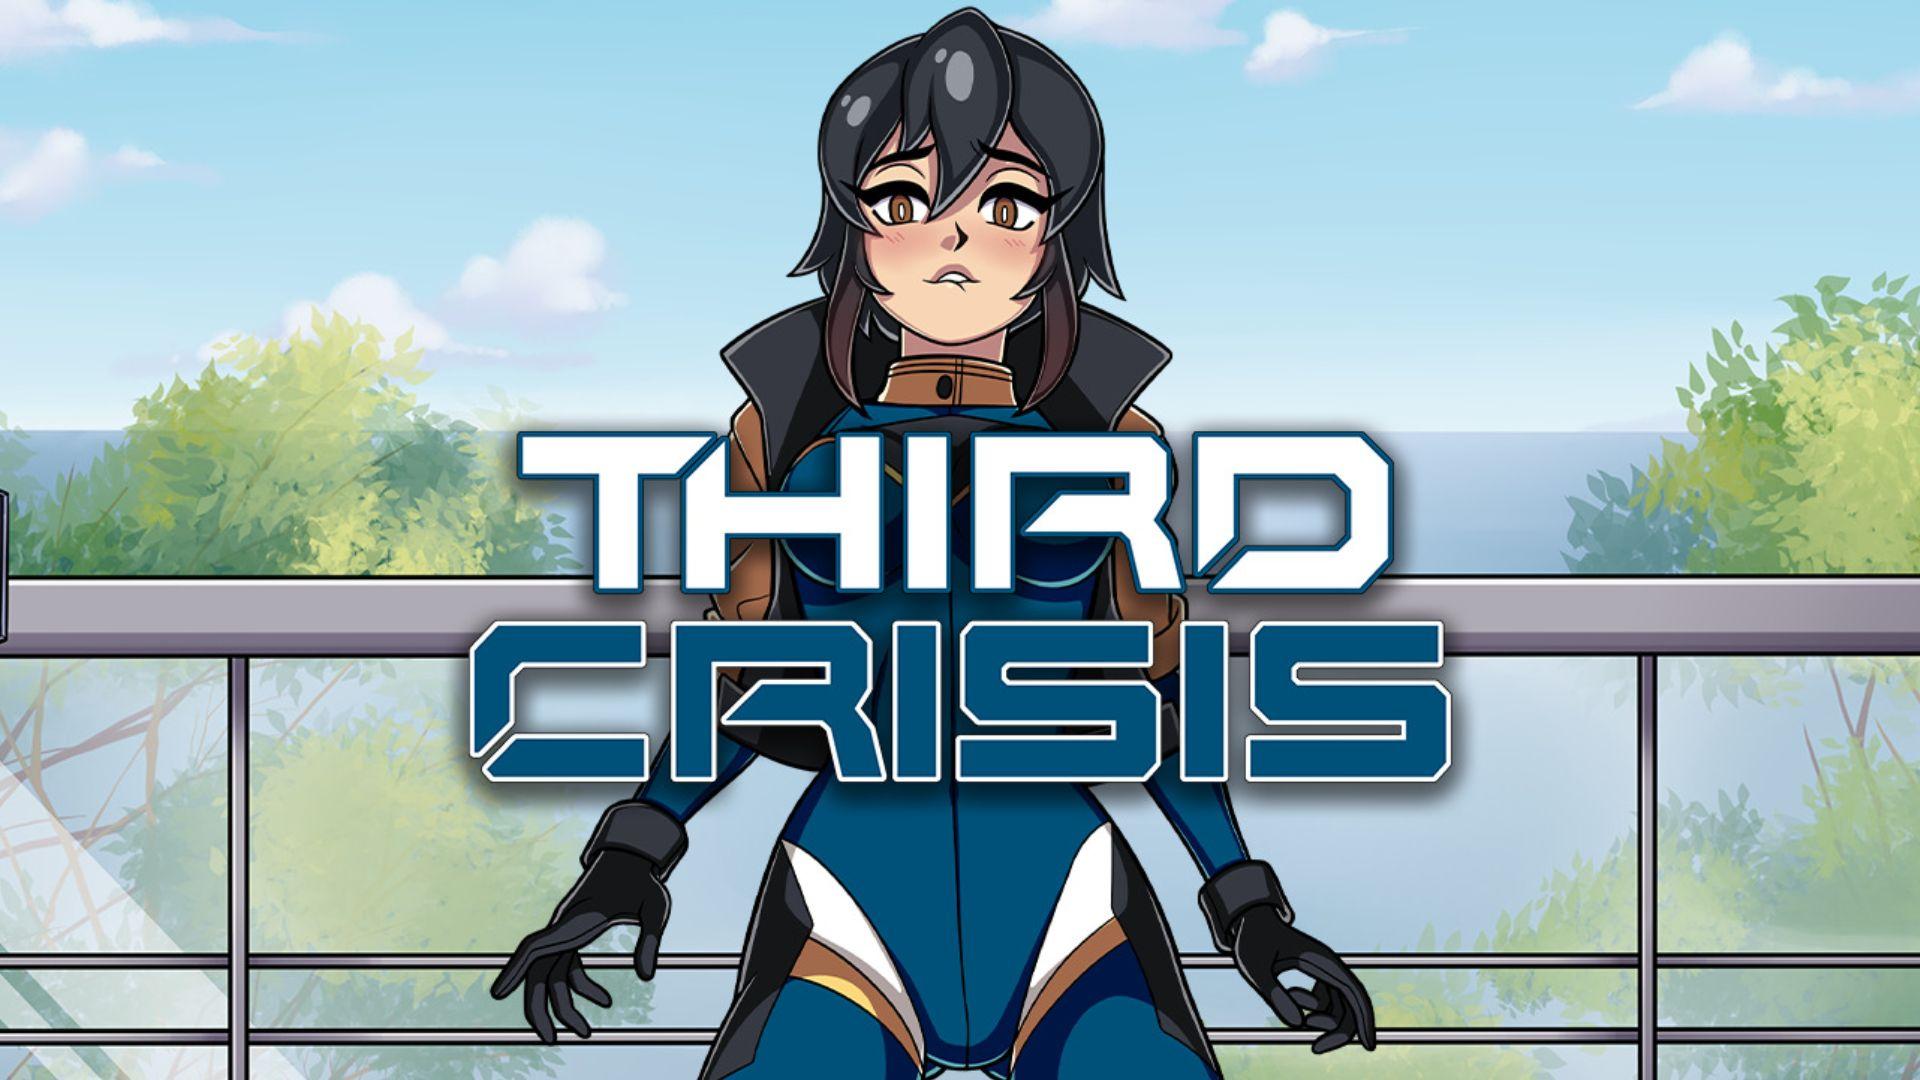 Third Crisis